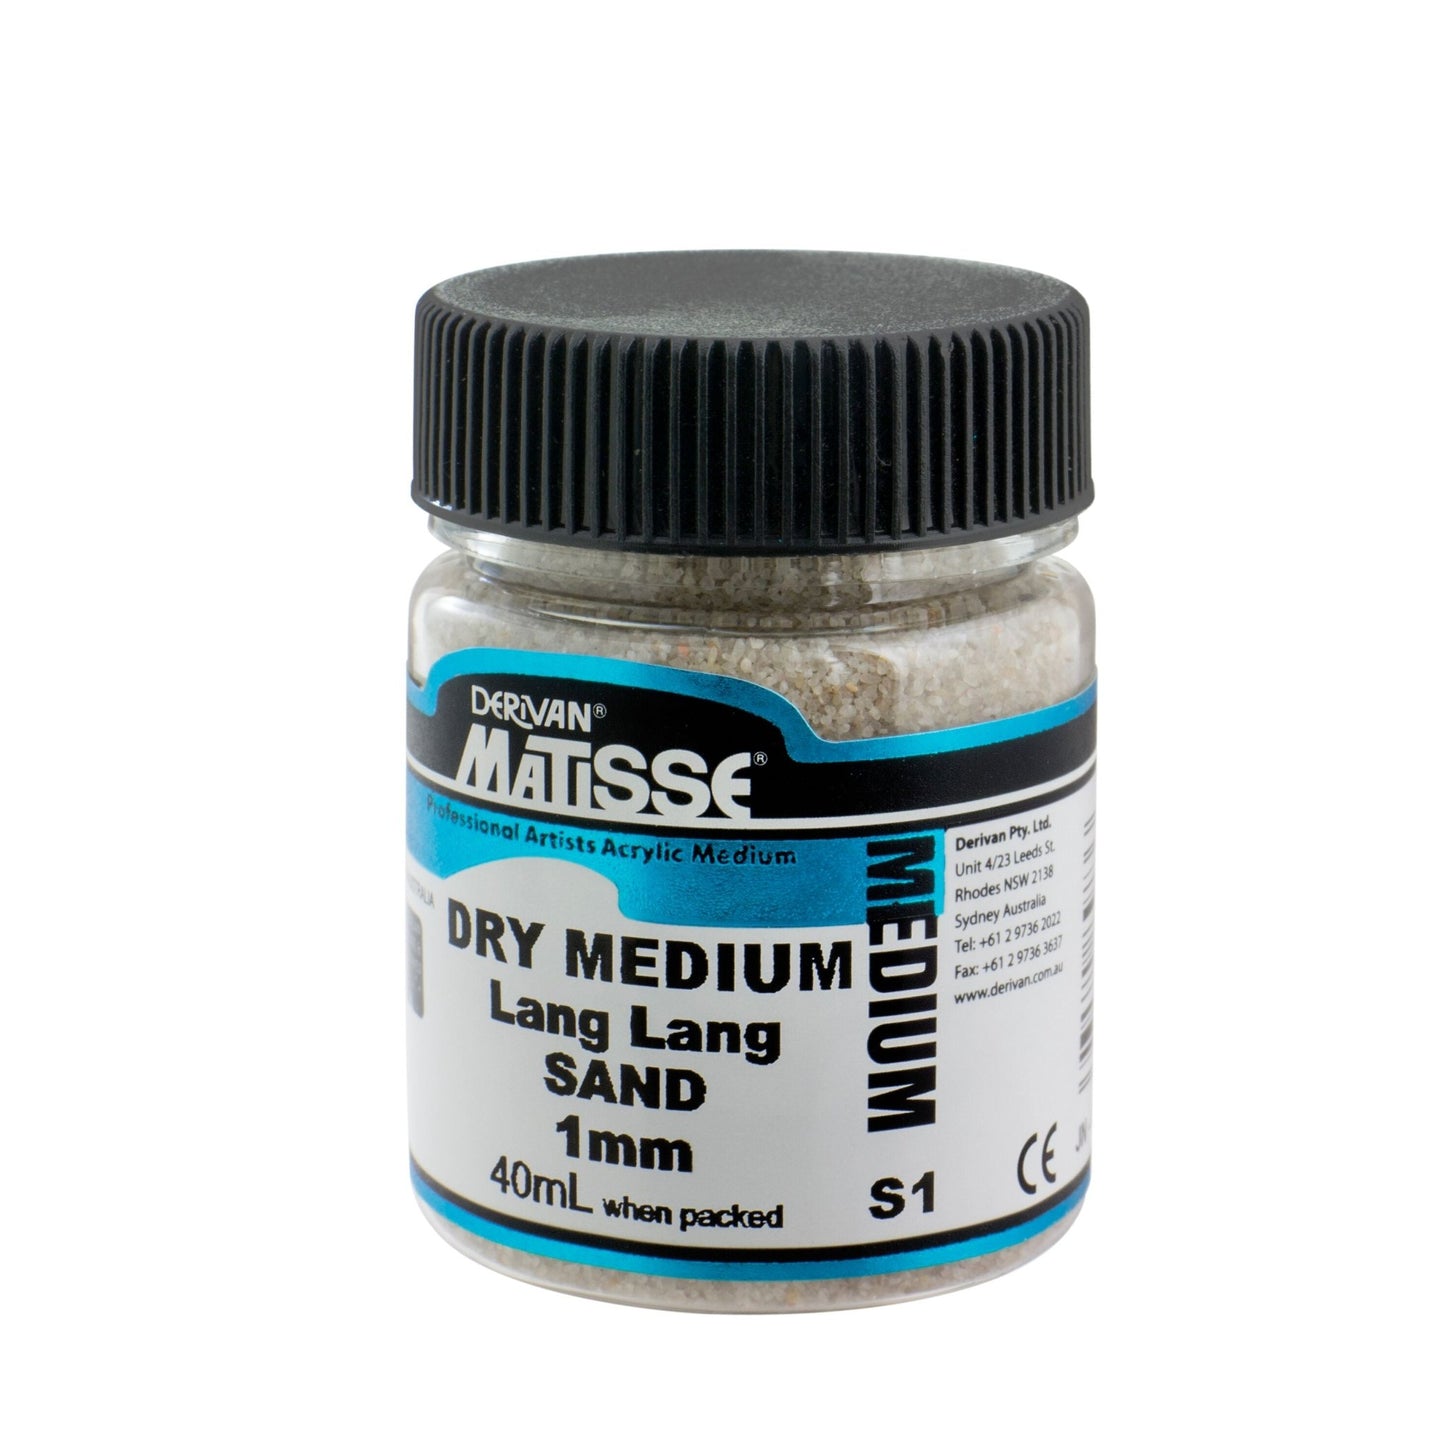 Matisse Dry Medium 40ml Lang Sand 1mm - theartshop.com.au